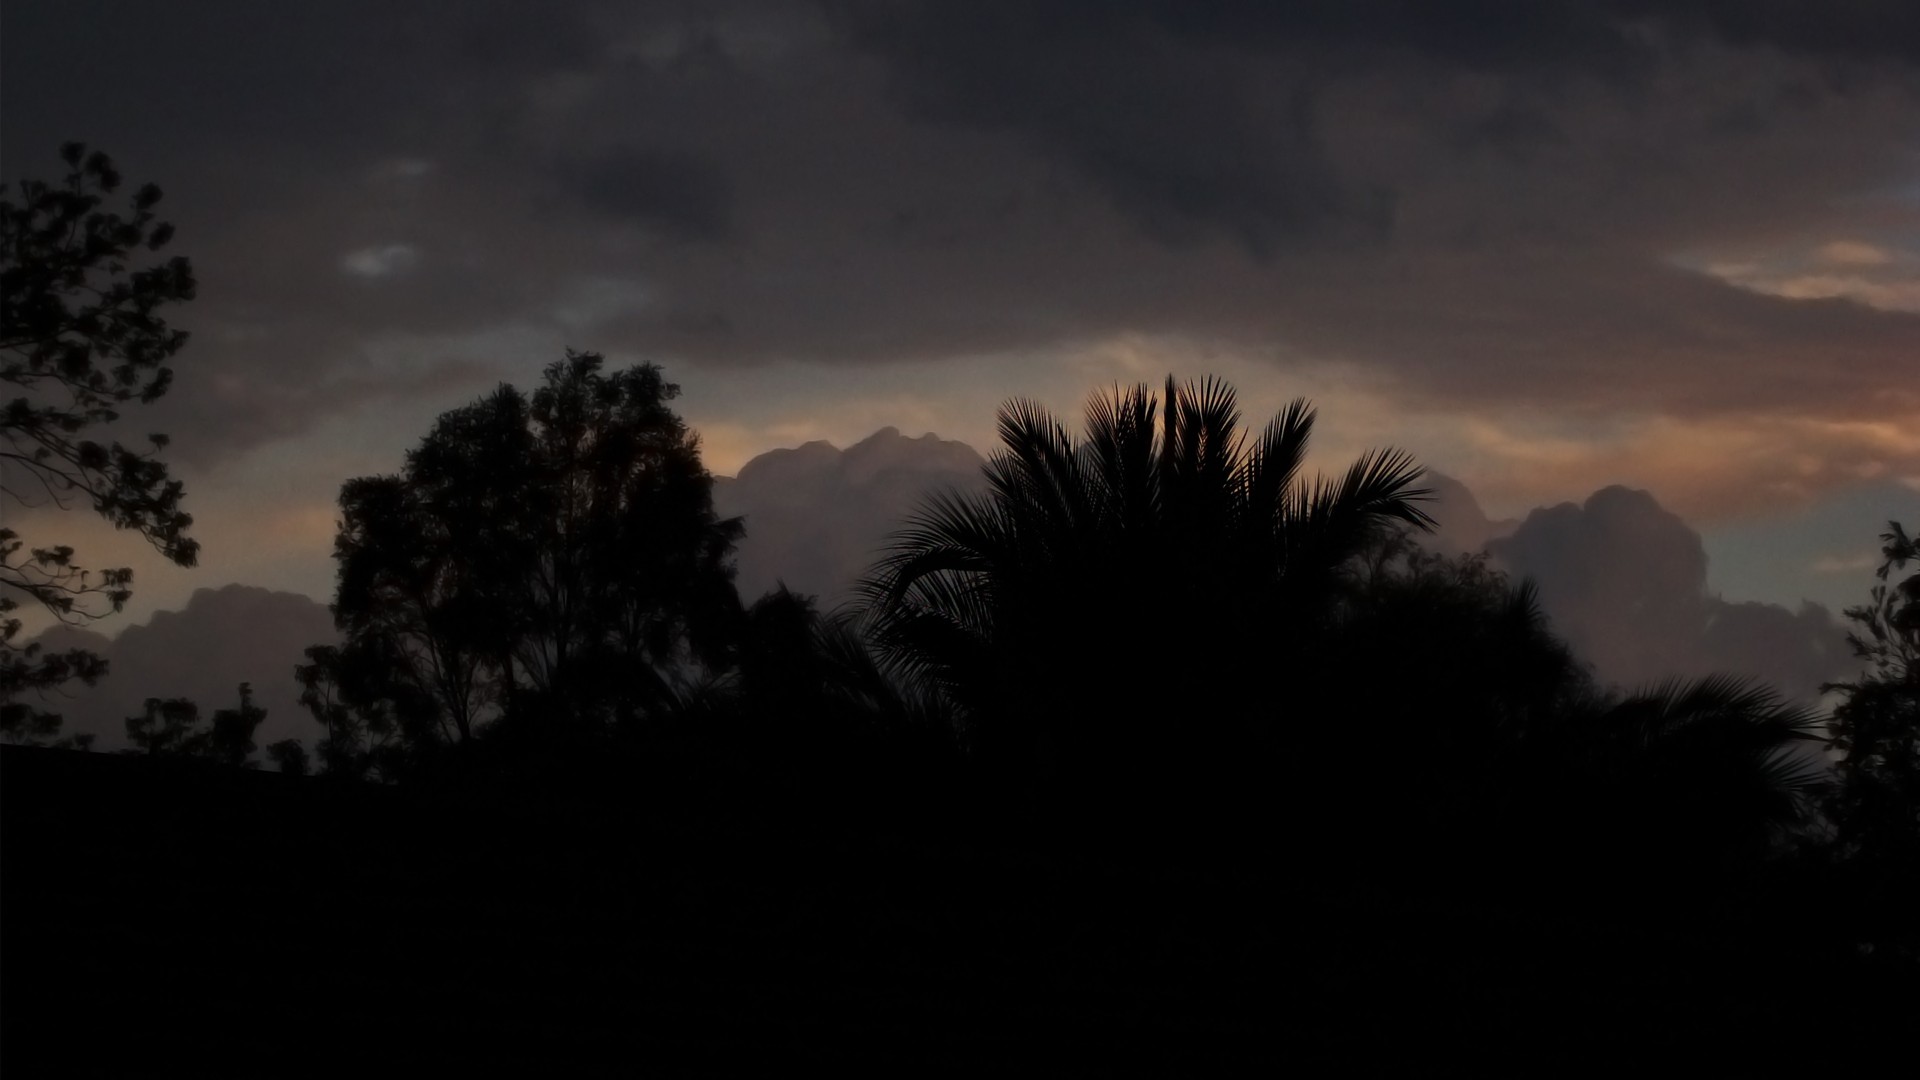 General 1920x1080 landscape nature dark palm trees clouds